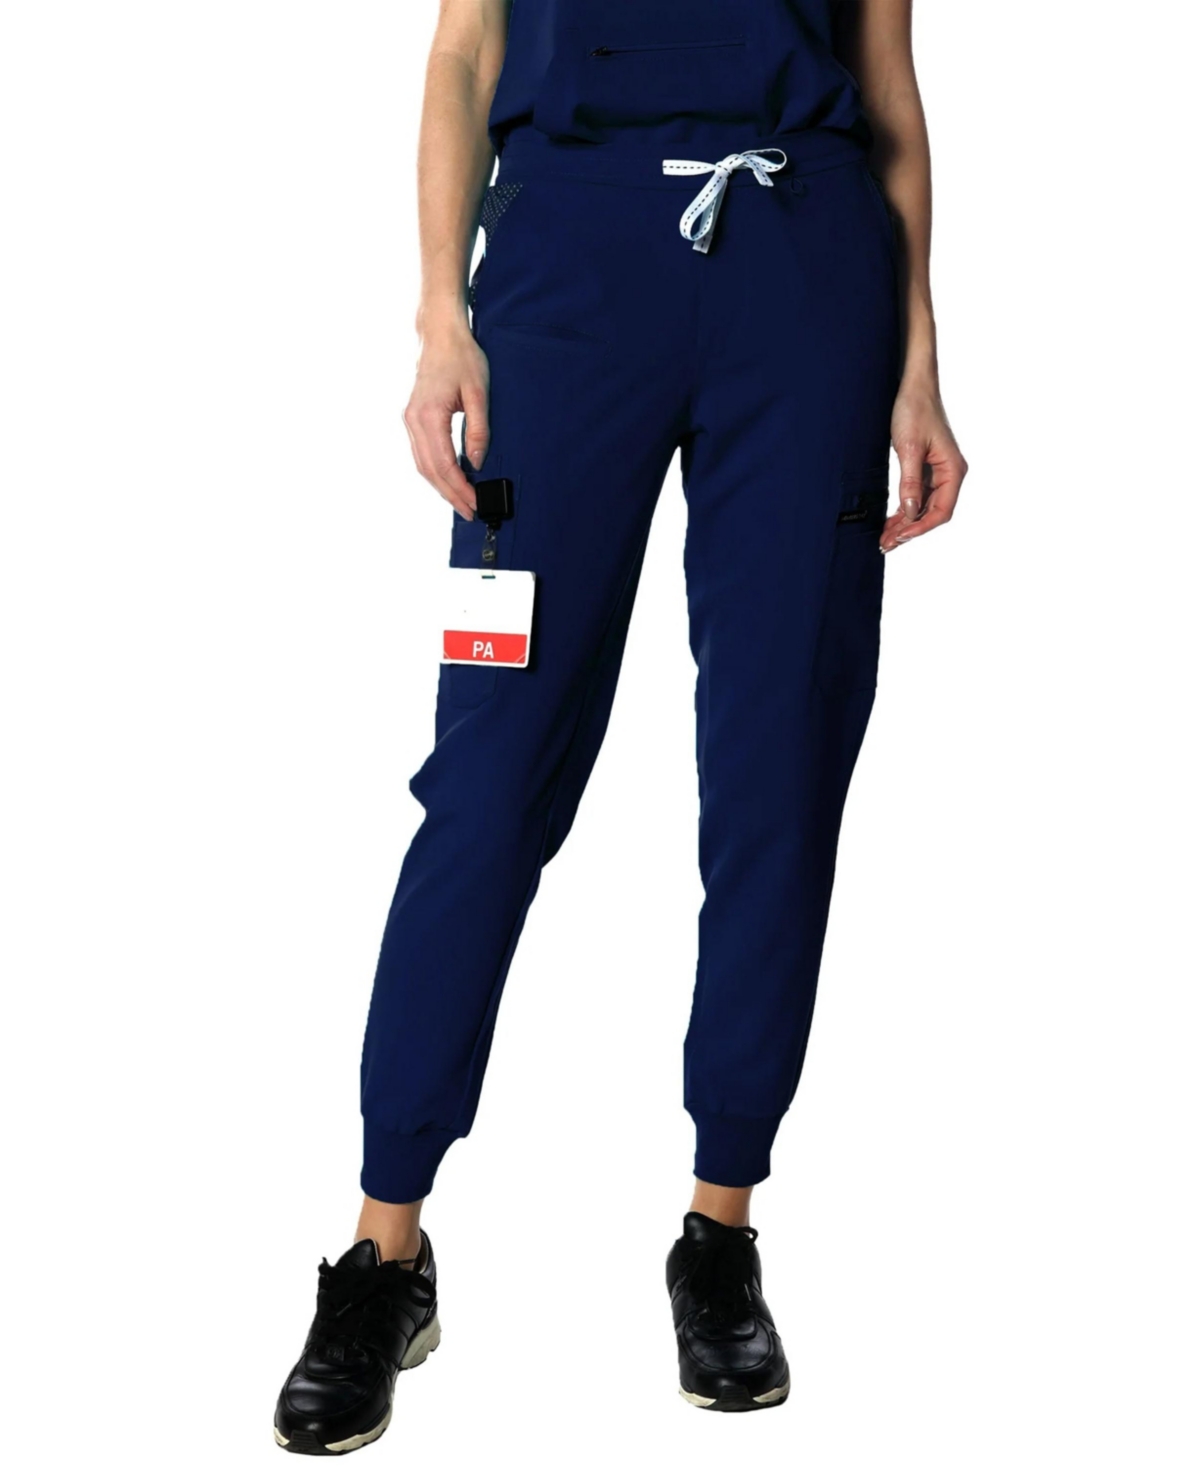 Valencia Jogger Scrub Pants for Petite Women - Royal blue